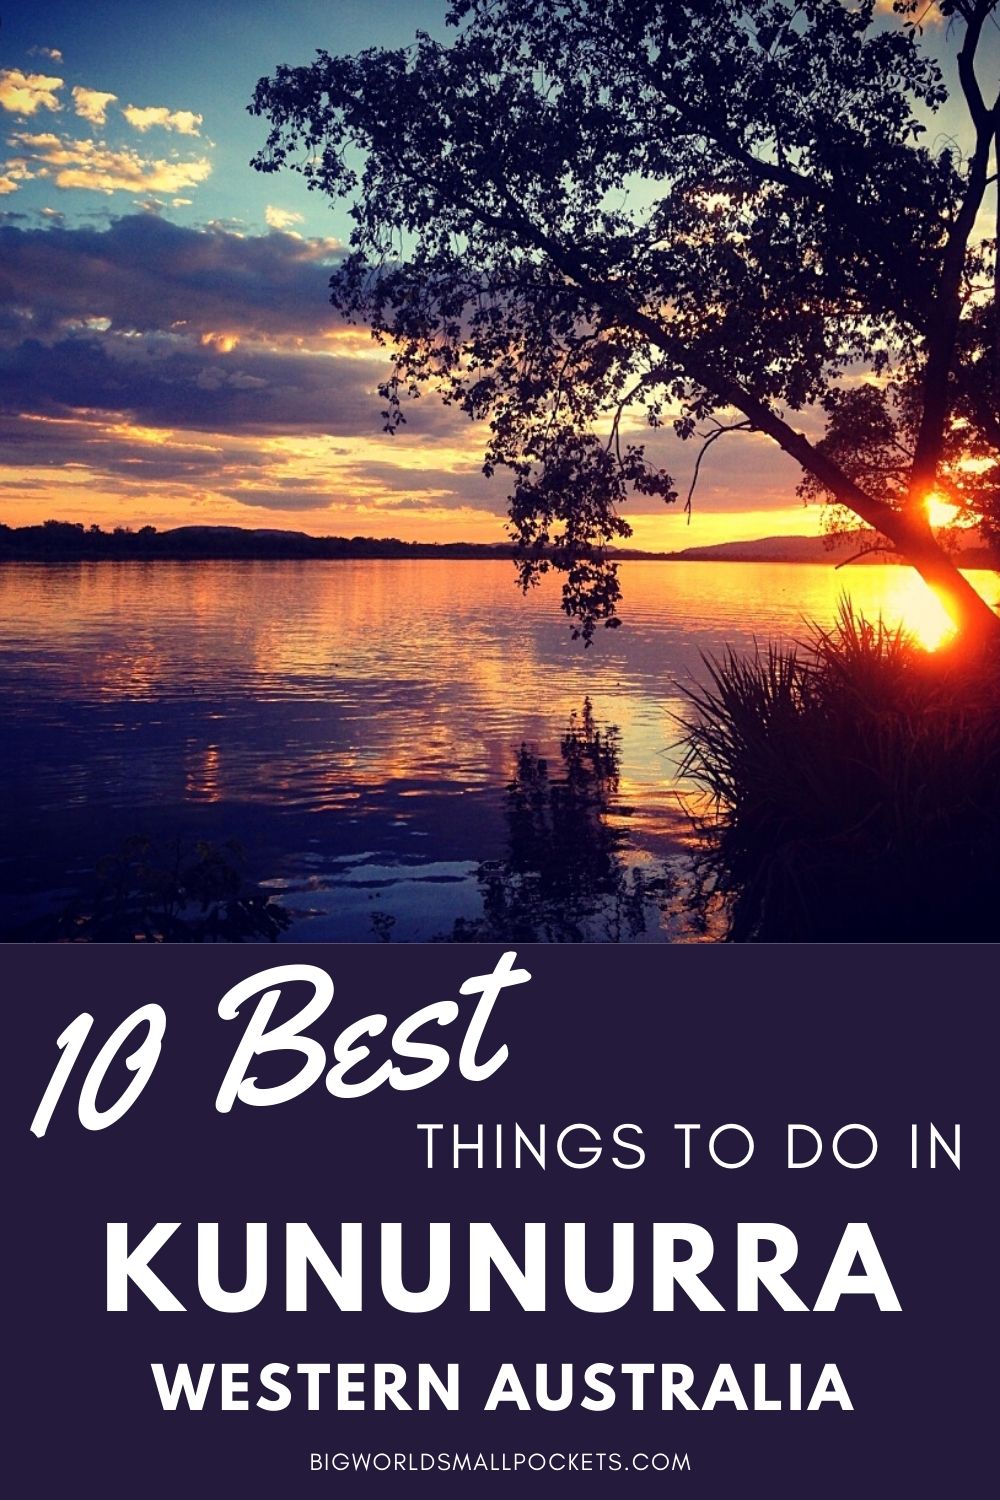 The 10 Best Things to Do in Kununurra, Western Australia